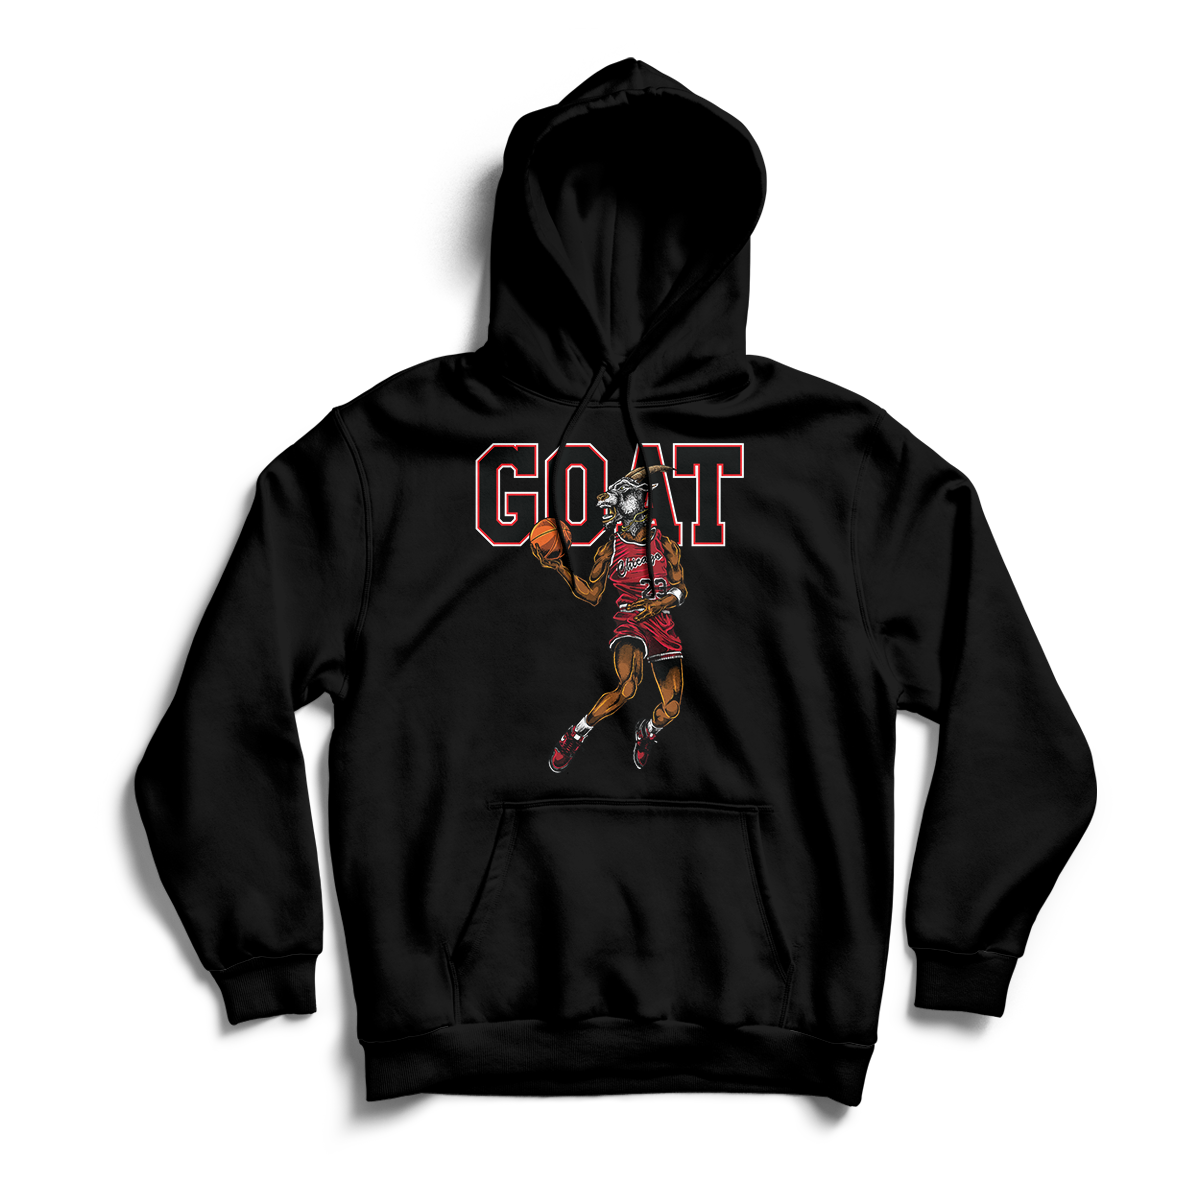 'Jordan Goat' in Reverse He Got Game CW Unisex Pullover Hoodie